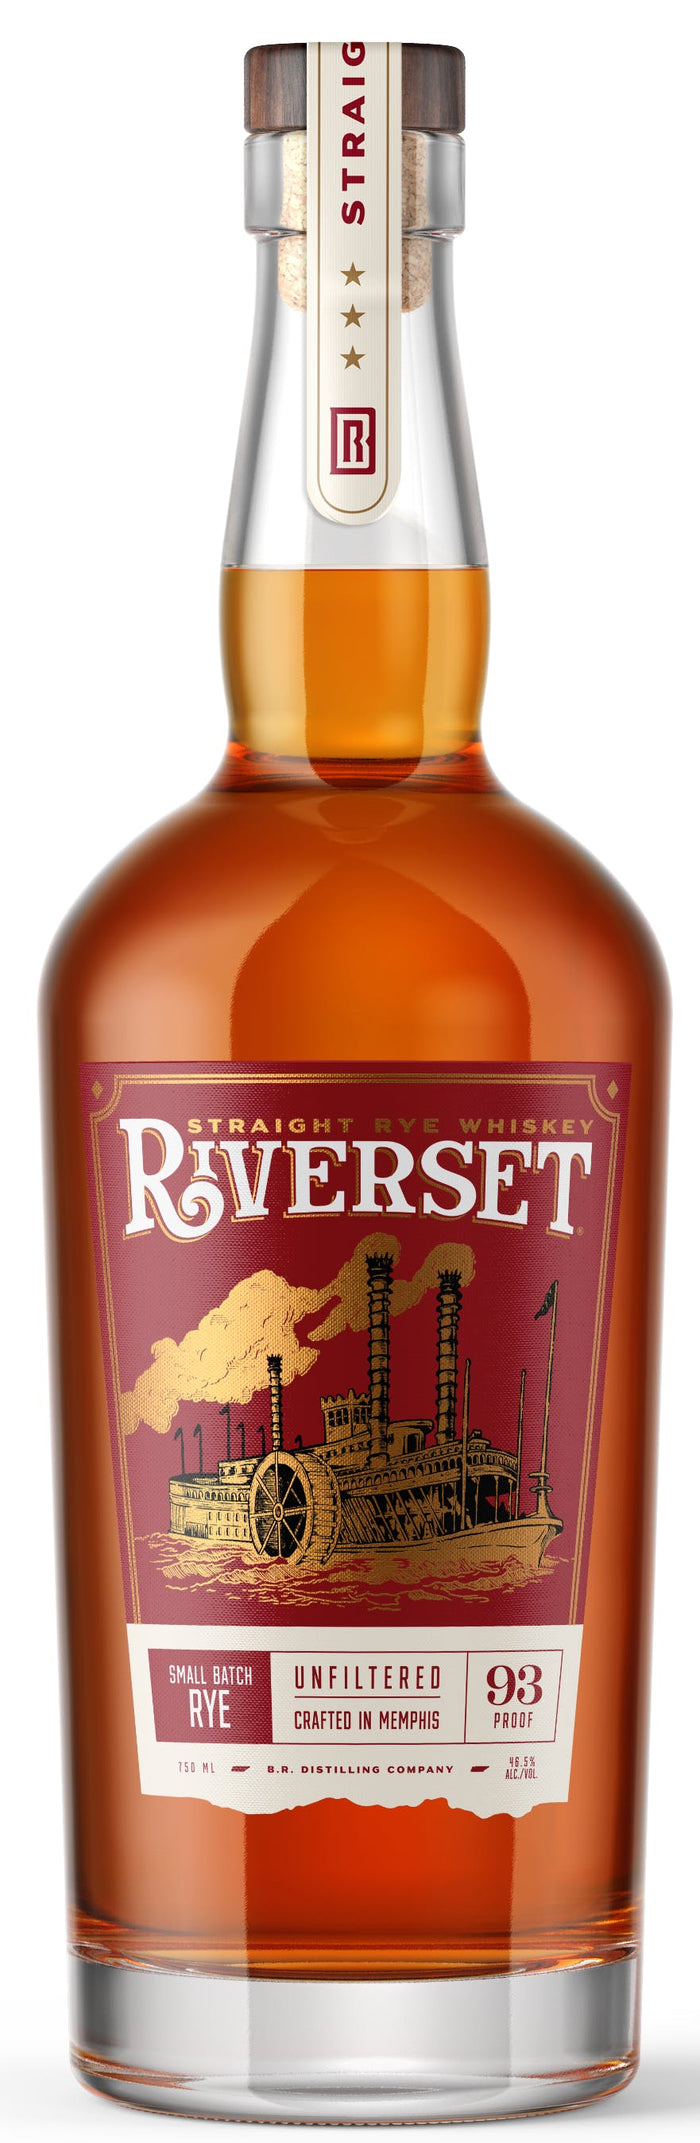 Riverset Small Batch Rye Whiskey